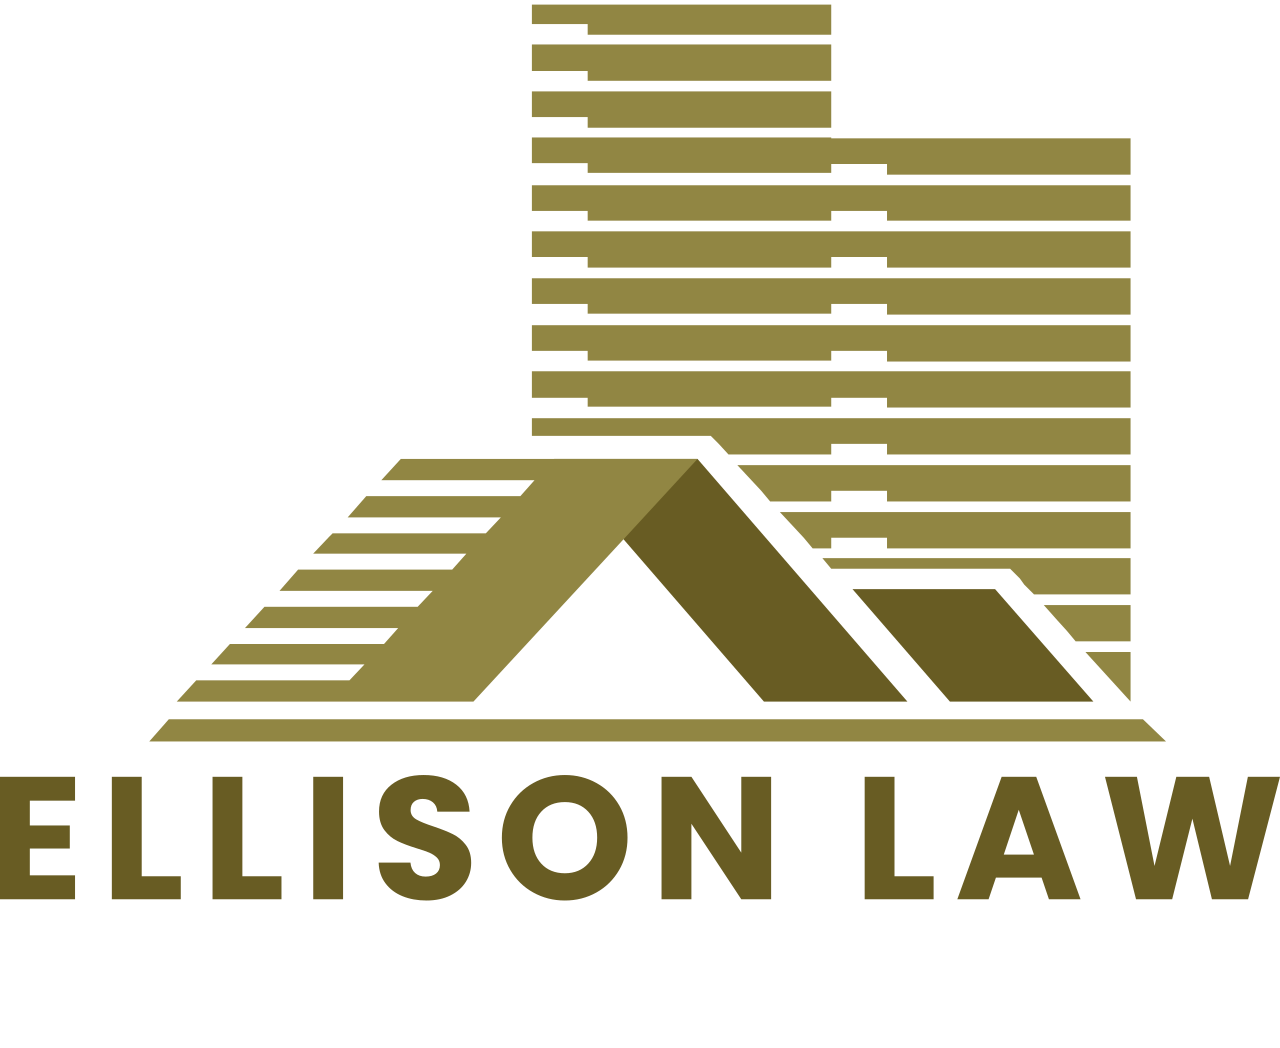 Ellison Law's logo